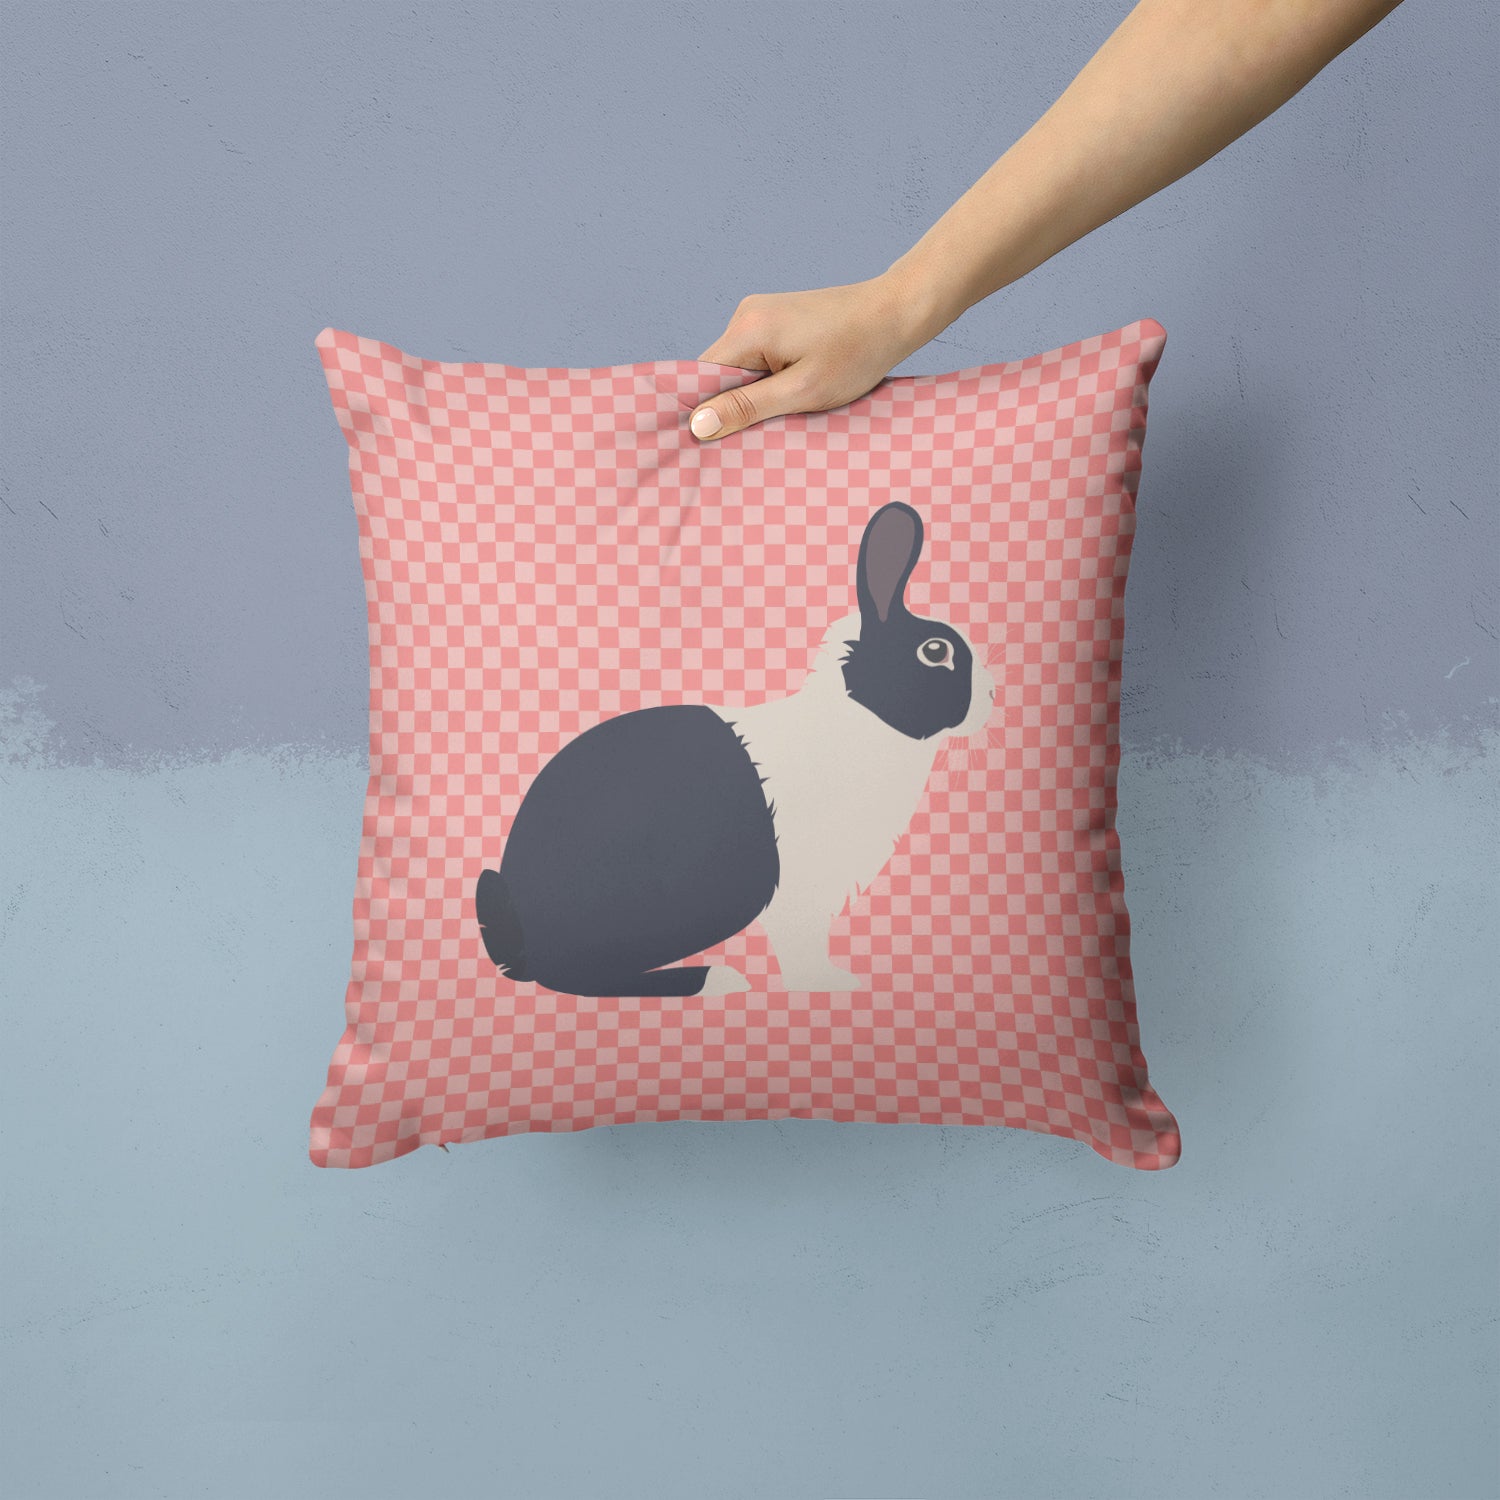 Dutch Rabbit Pink Check Fabric Decorative Pillow BB7958PW1414 - the-store.com